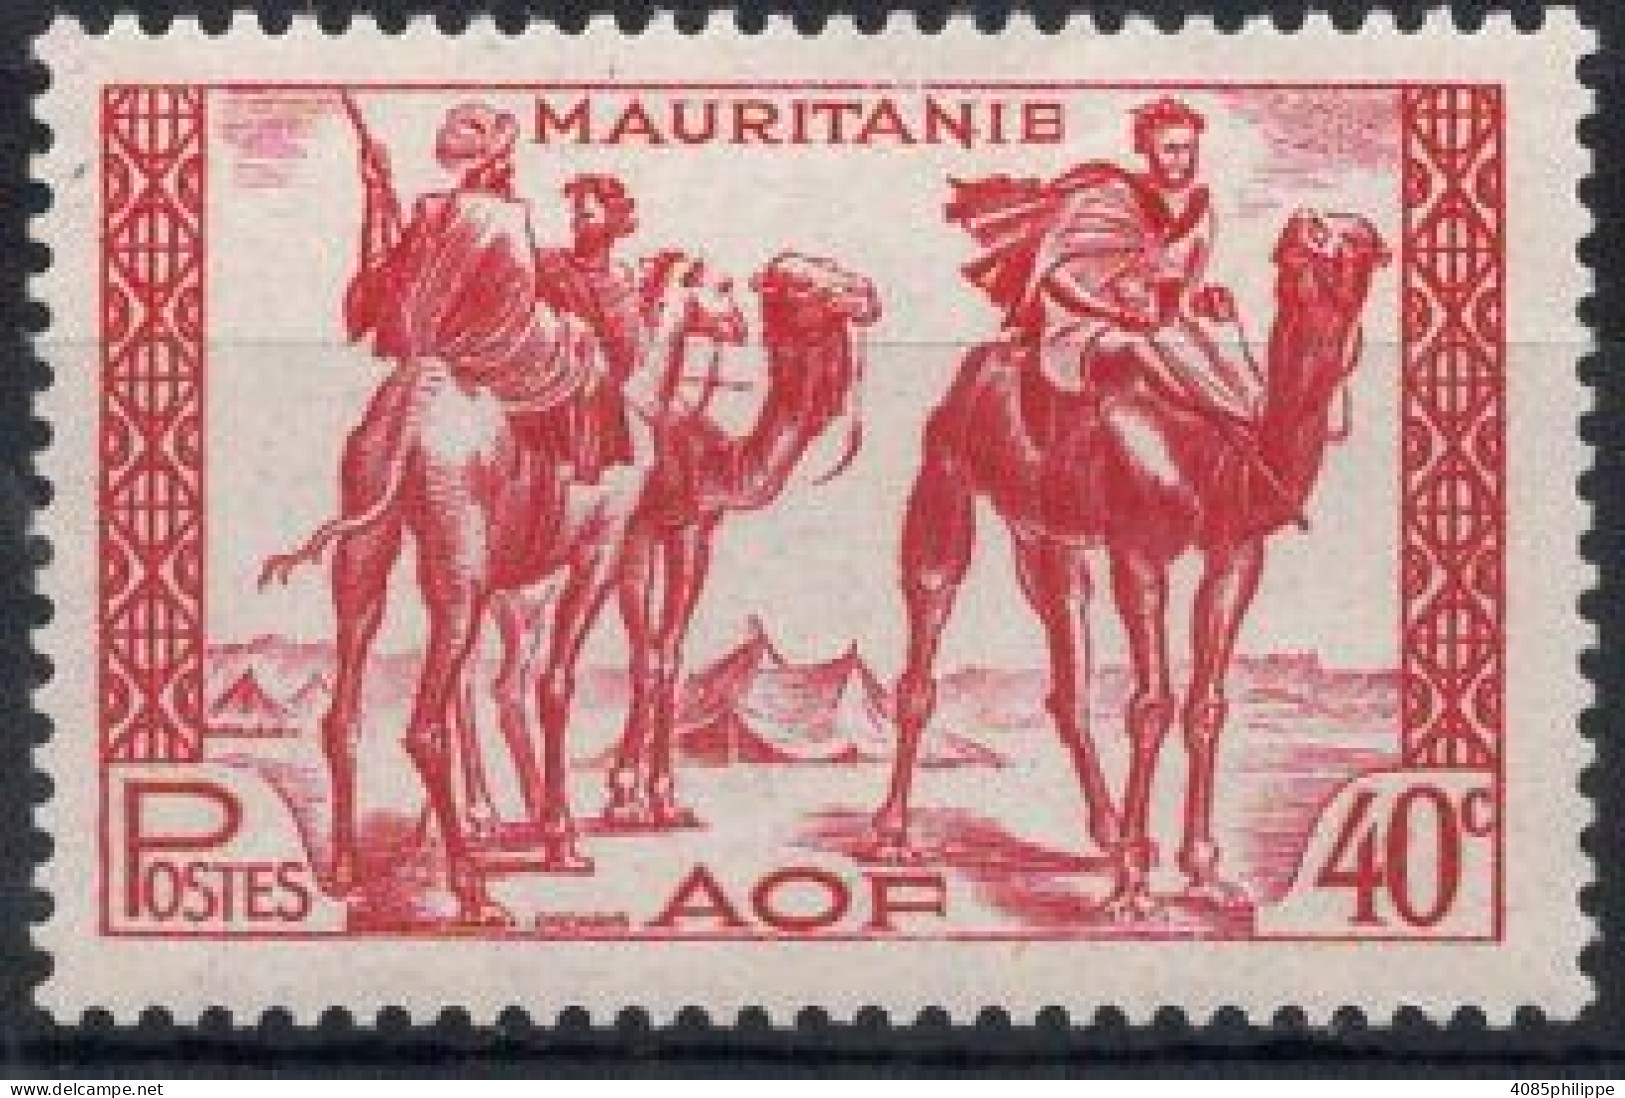 Mauritanie Timbre-poste N°127** Neuf Sans Charnière TB Cote : 3€00 - Neufs